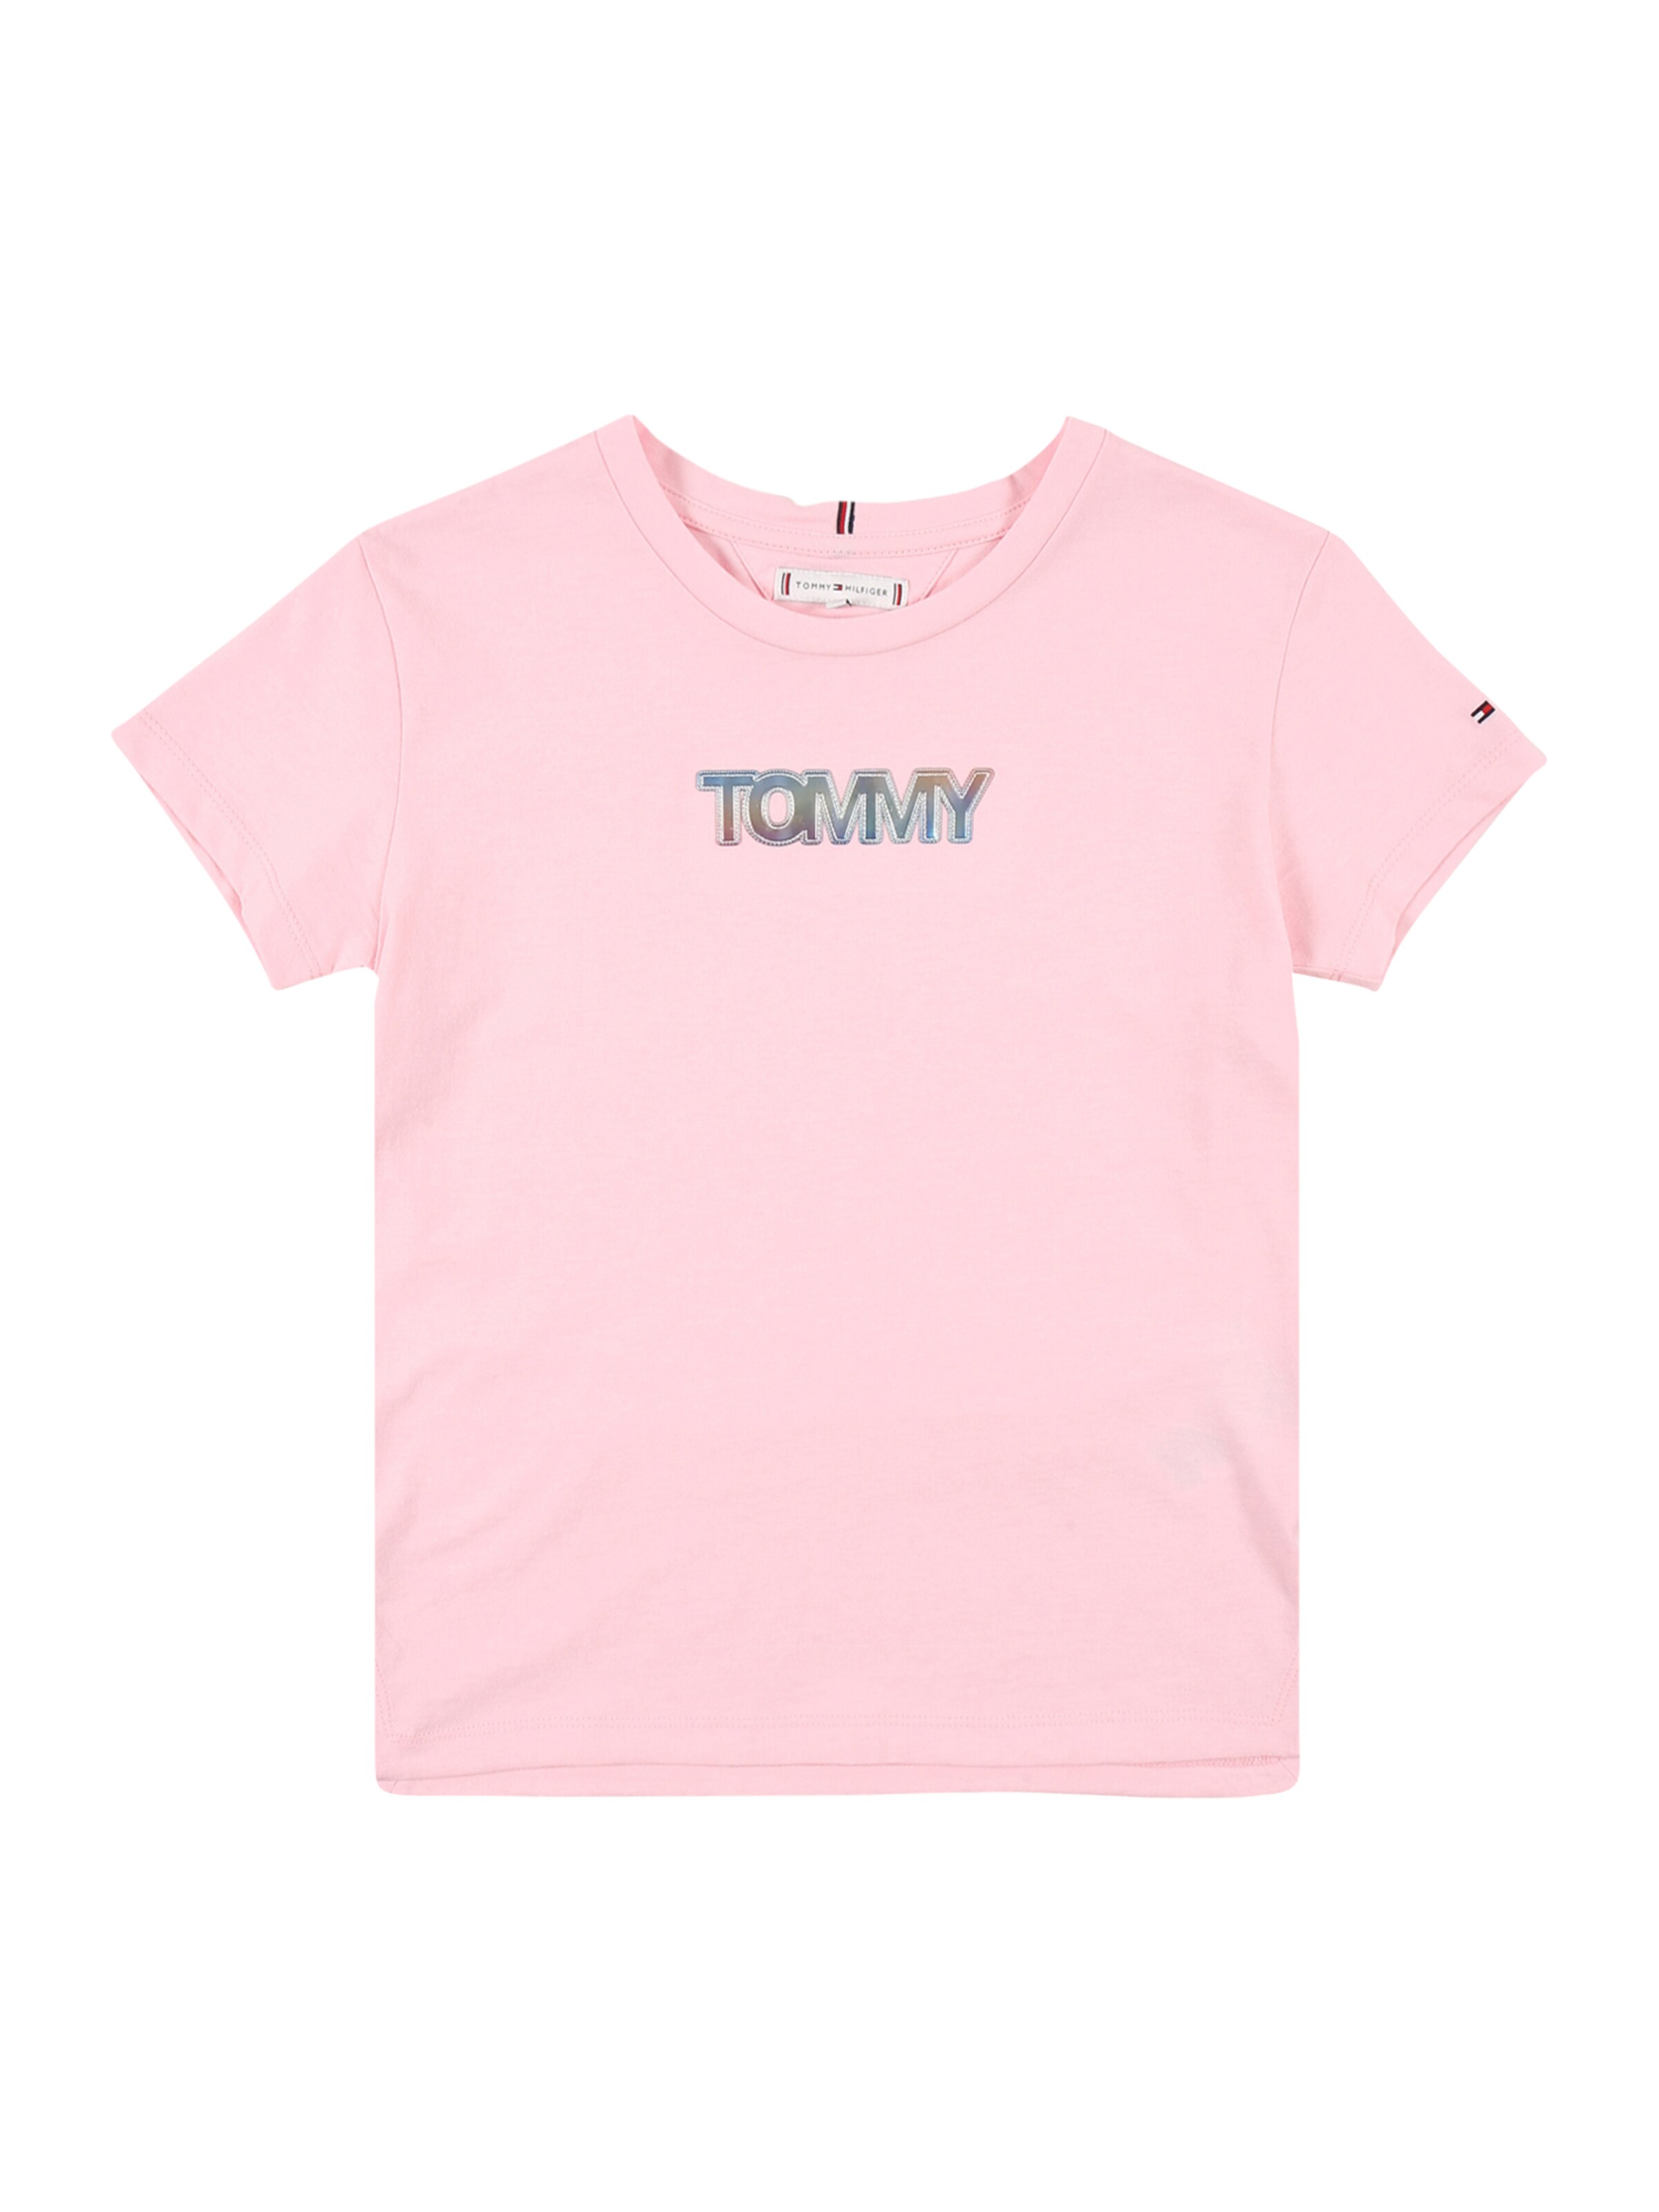 TOMMY HILFIGER Shirt in Light pink 